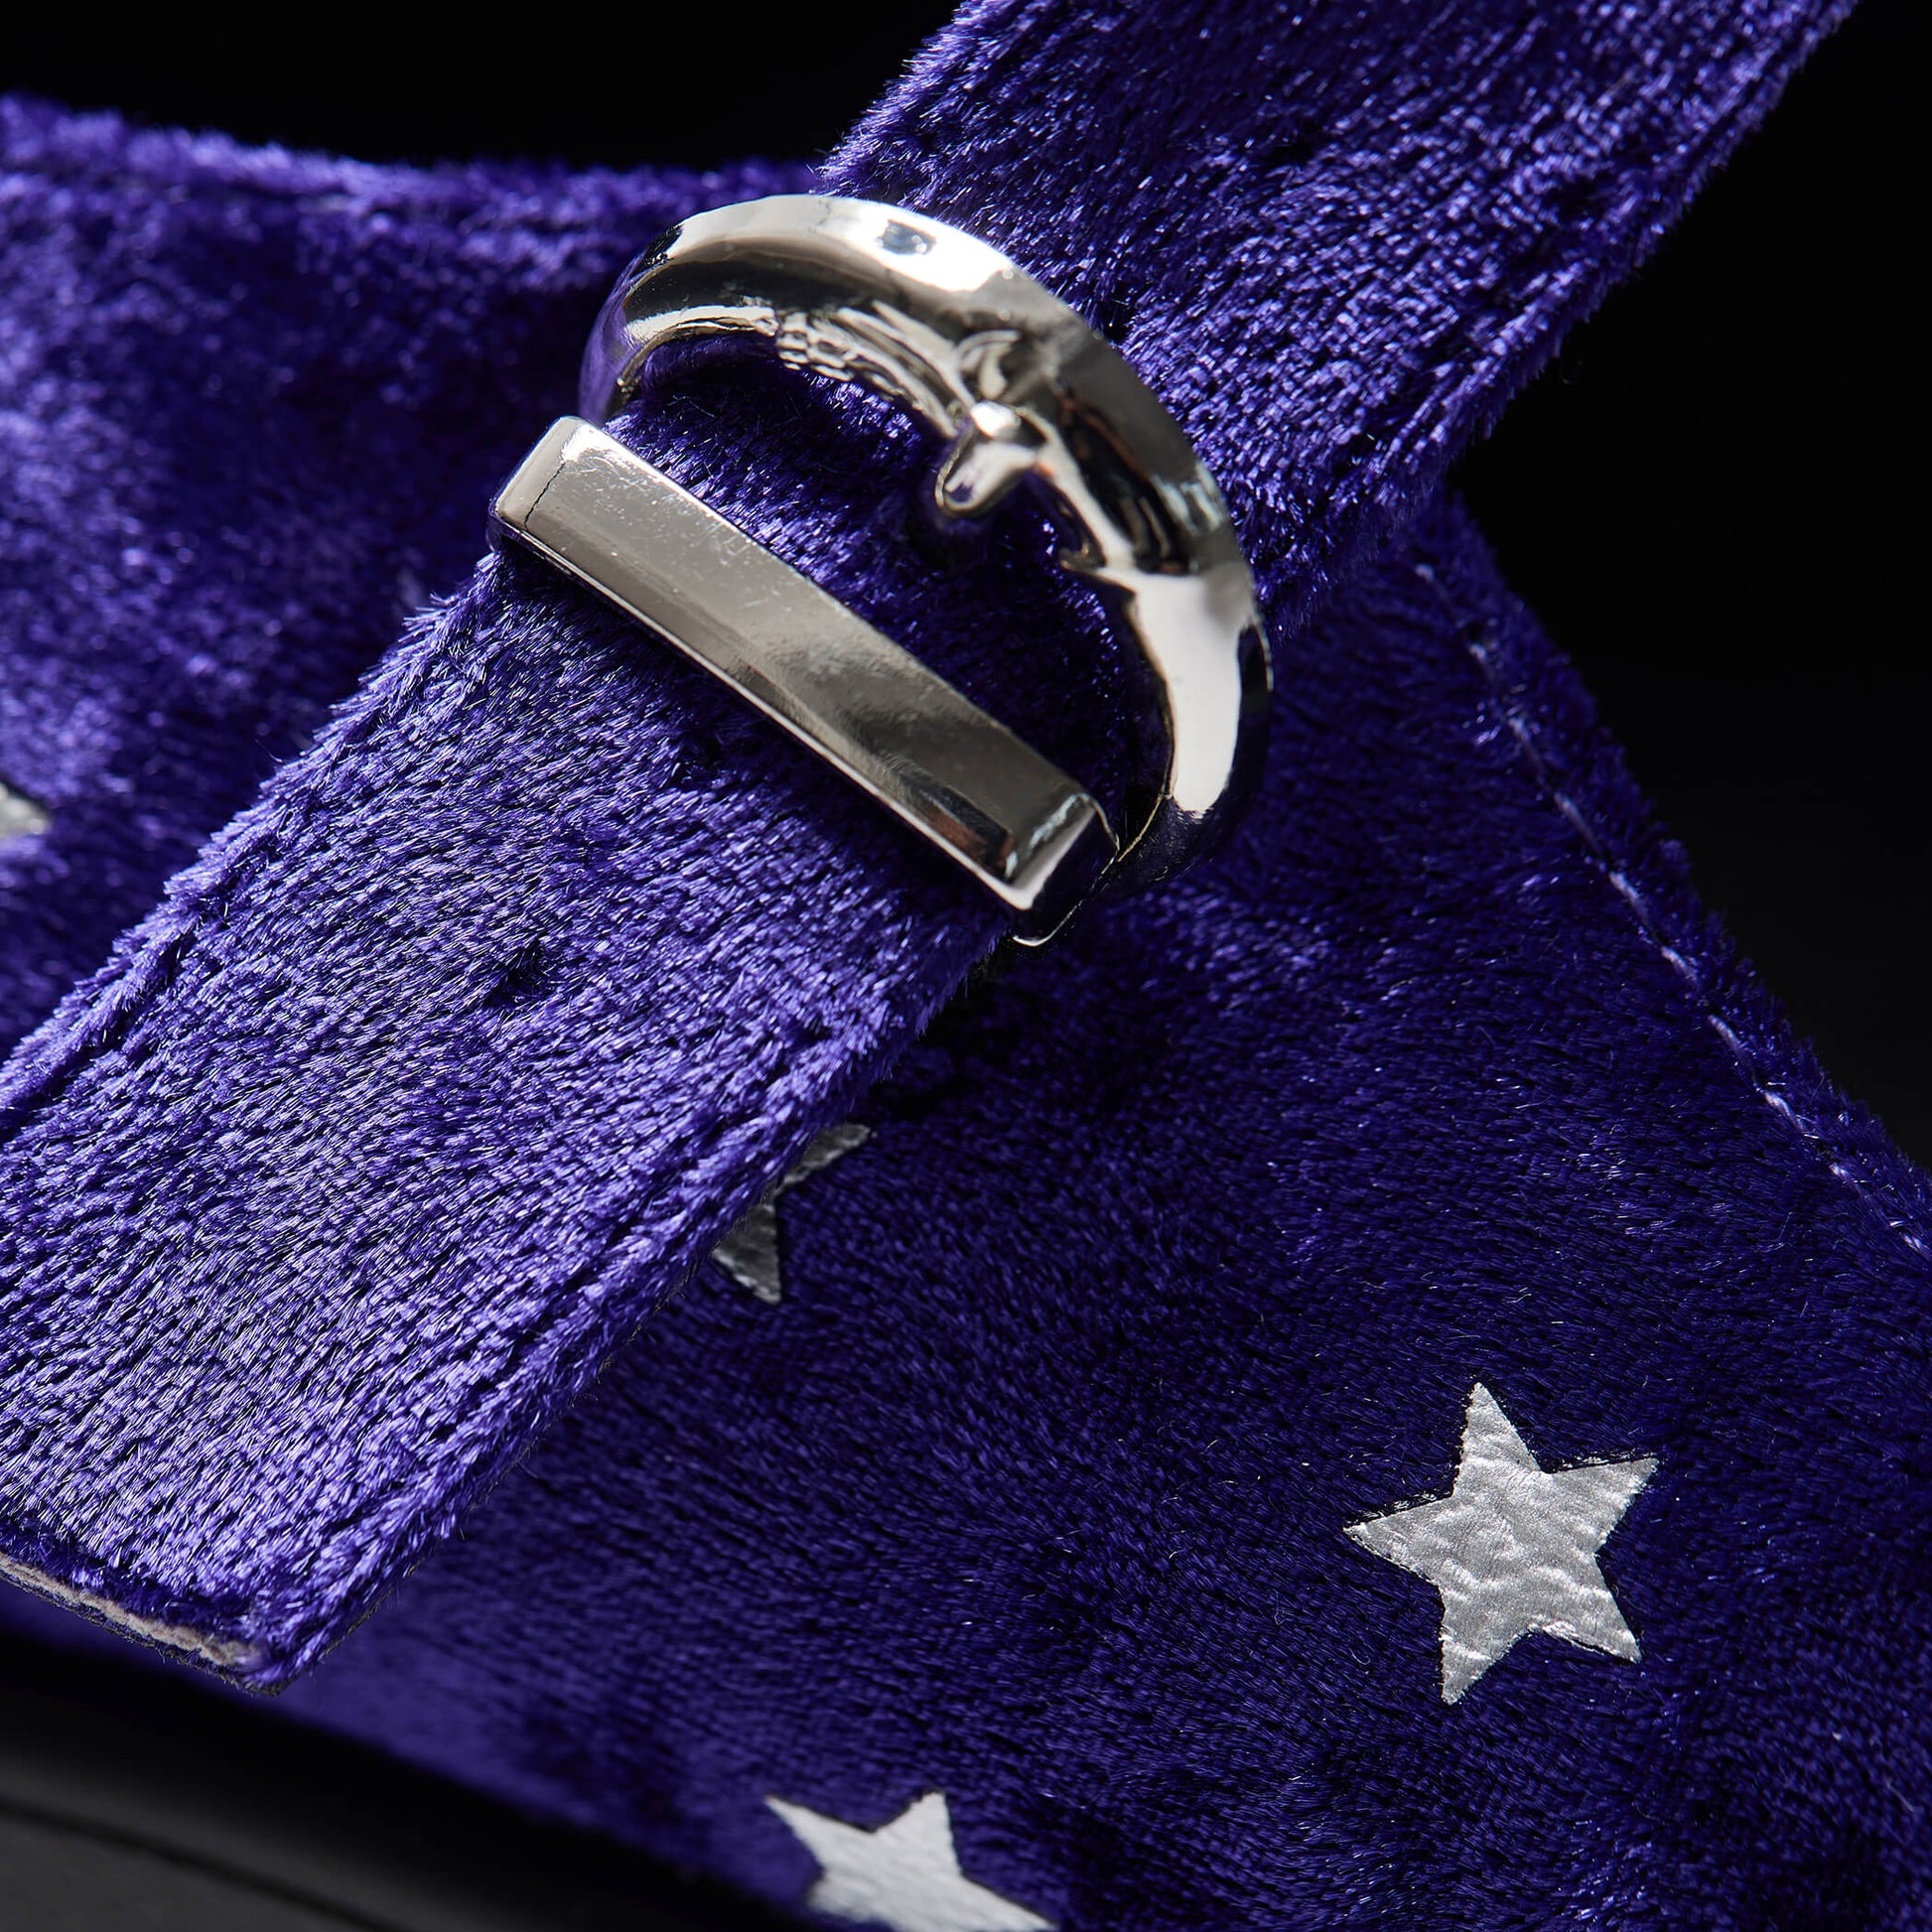 Tira Spellbound Purple Mary Janes 'Celestial Dusk Edition' - Mary Janes - KOI Footwear - Purple - Buckle Detail